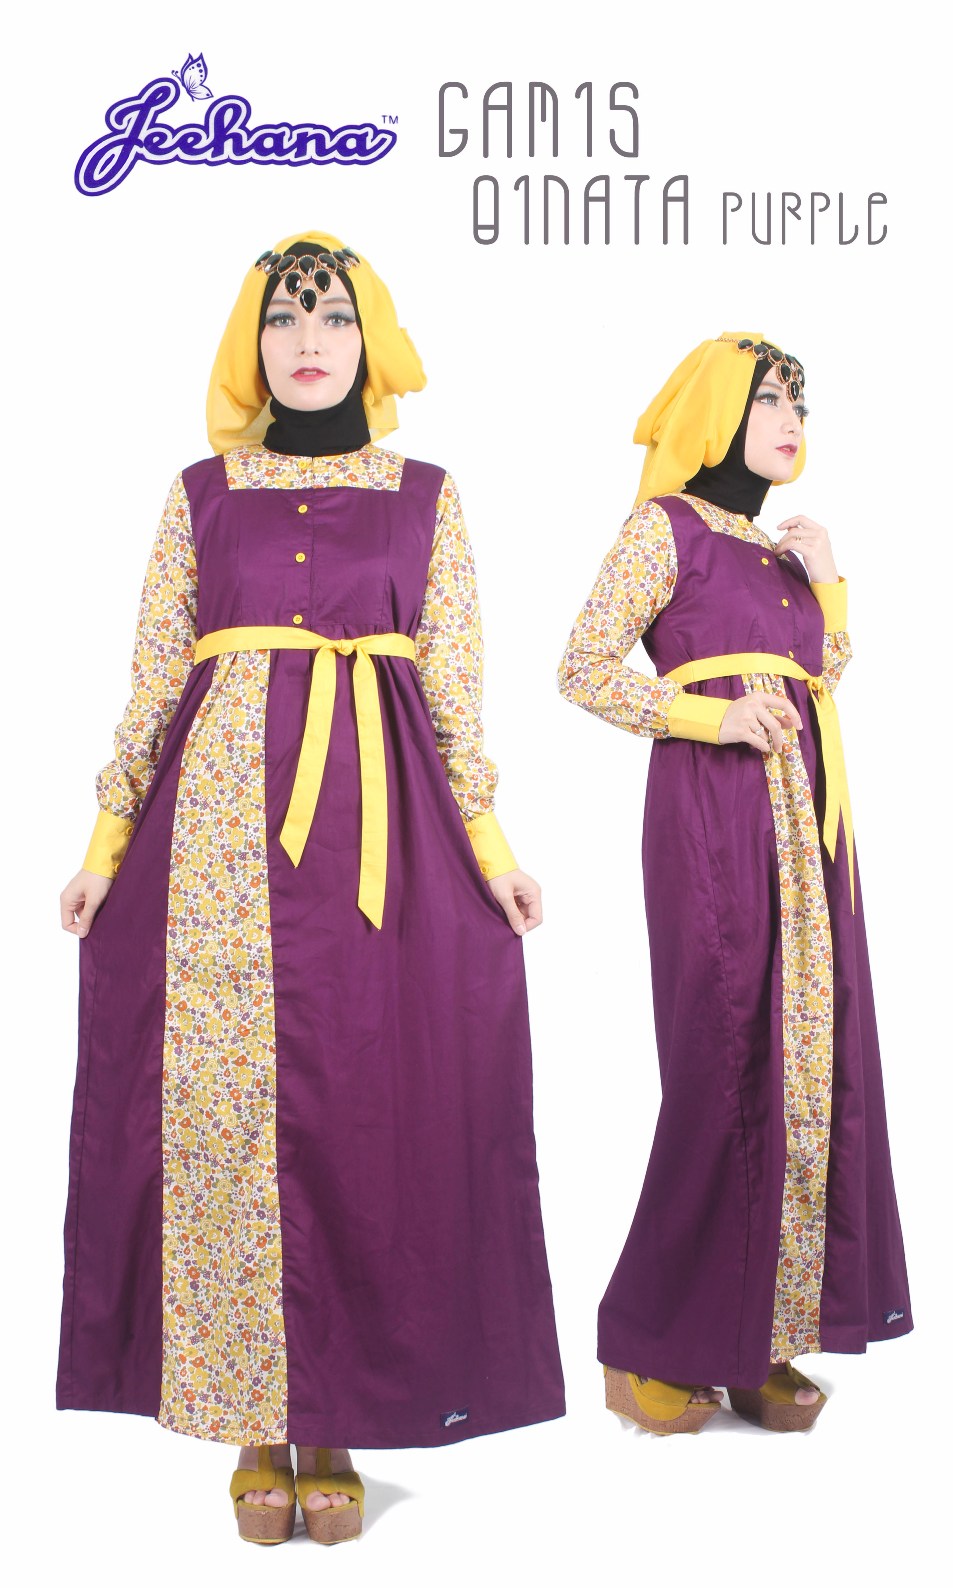 Baju Muslim Terbaru 2018 Online: Baju Gamis Qinata by Jeehana